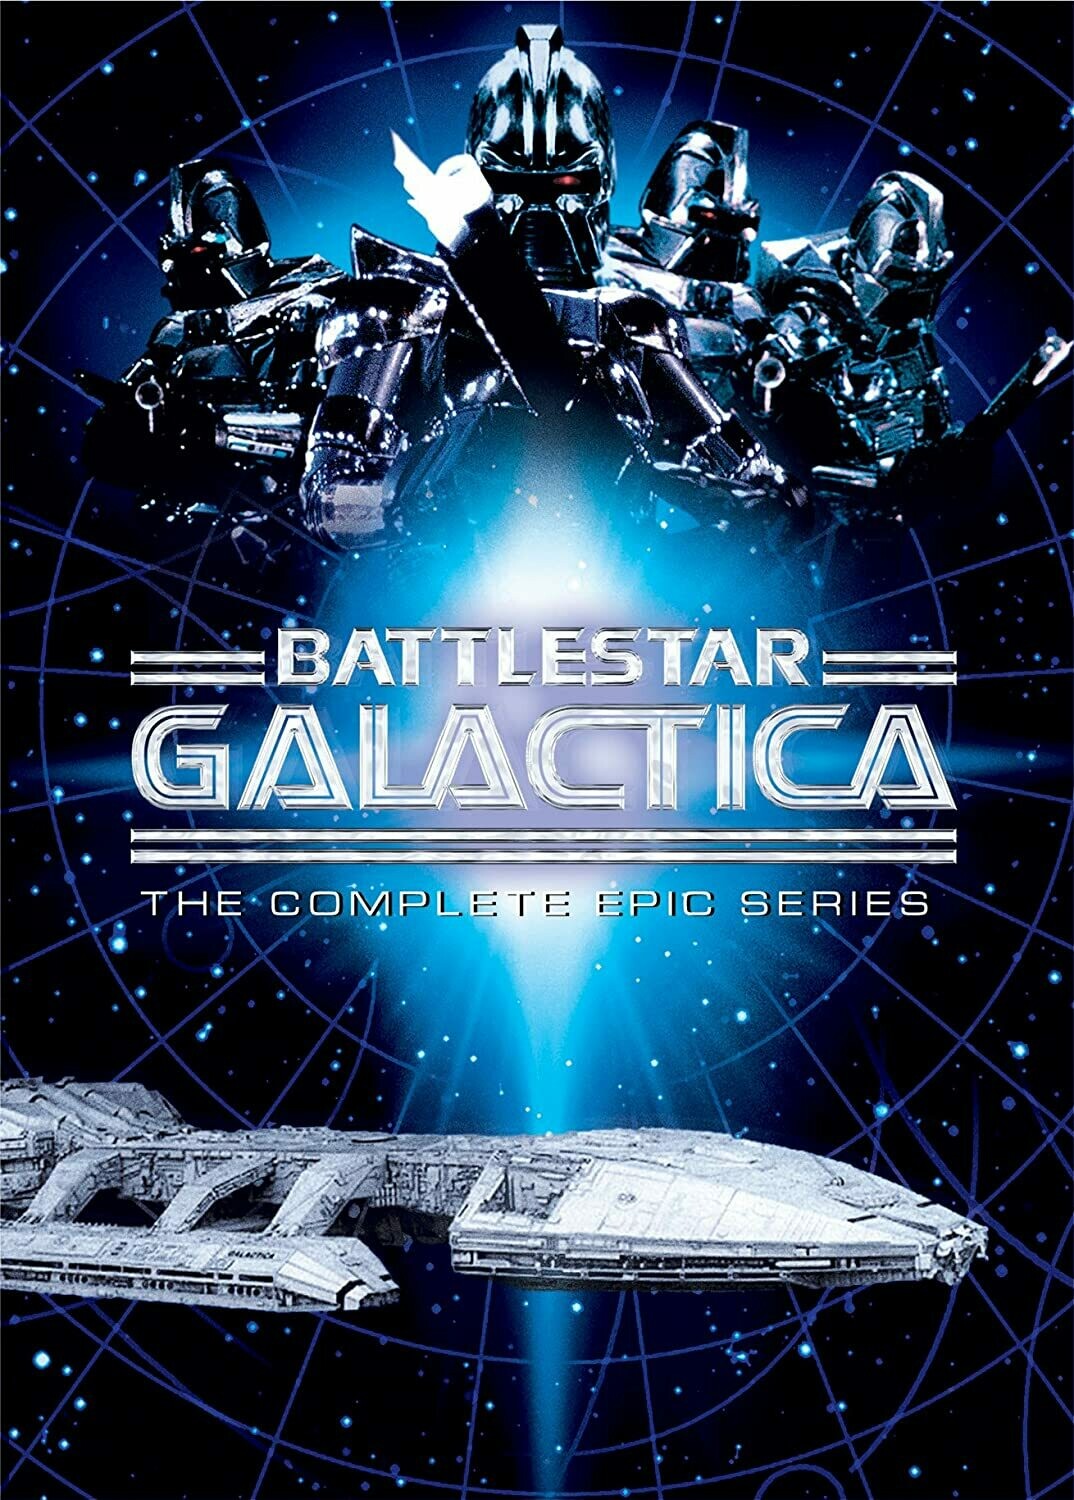 Battlestar Galactica TV Series (1978) (7 day rental)